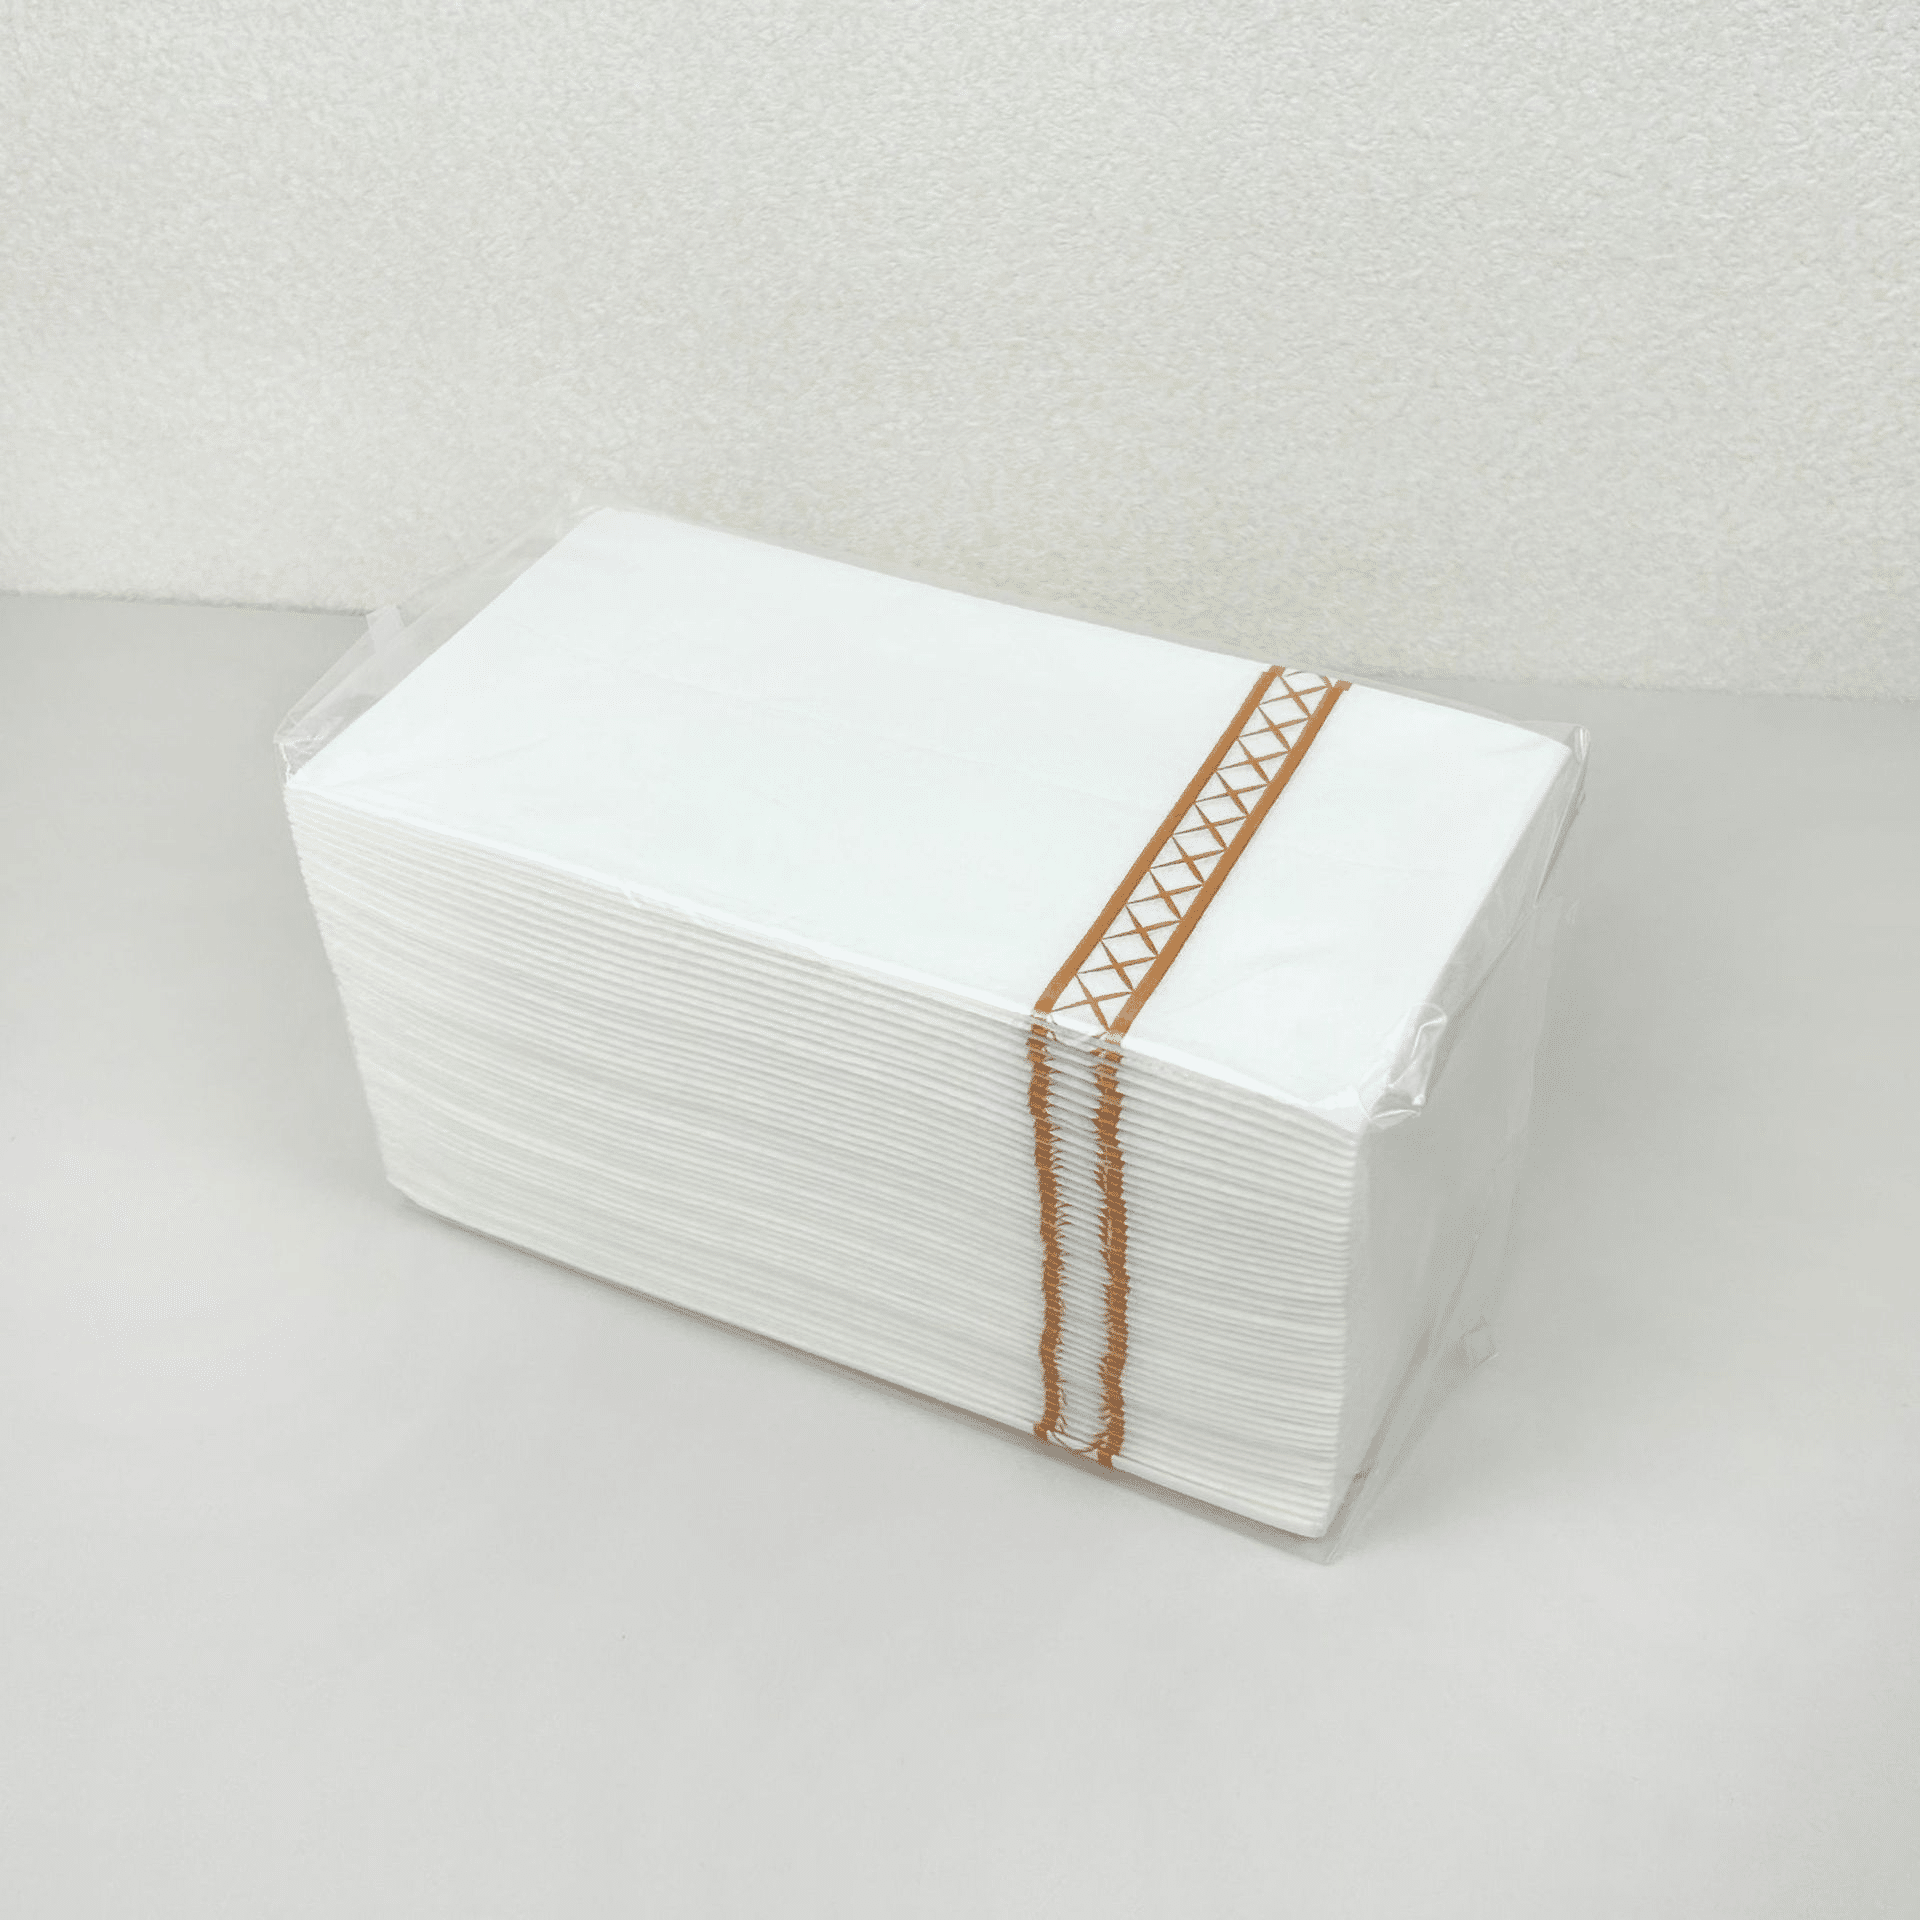 40x30cm printed white linen like napkins